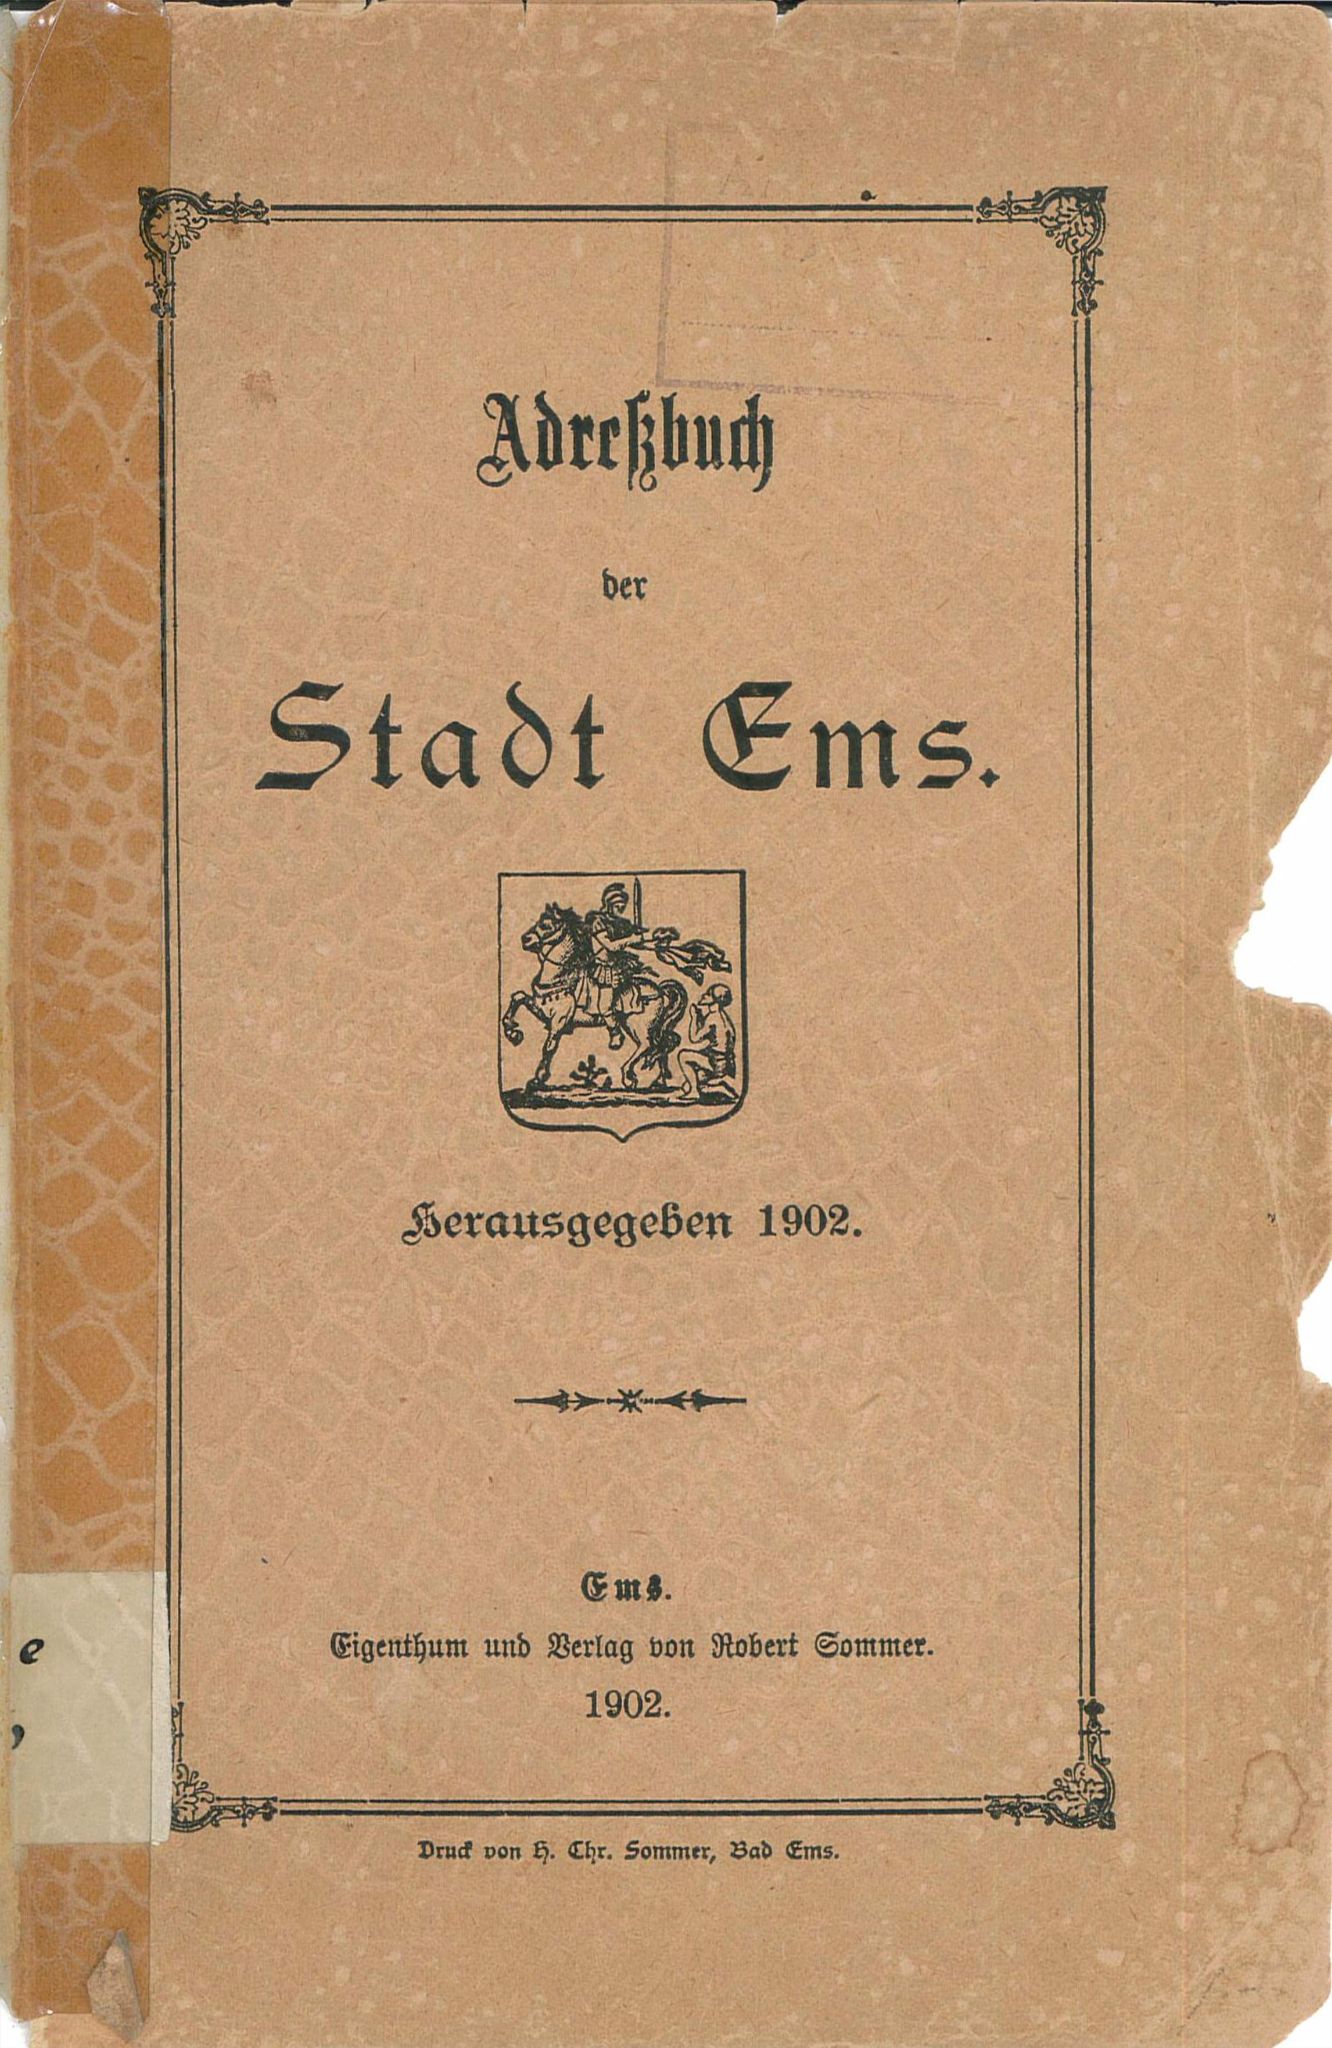 Adreßbuch der Stadt Ems 1902